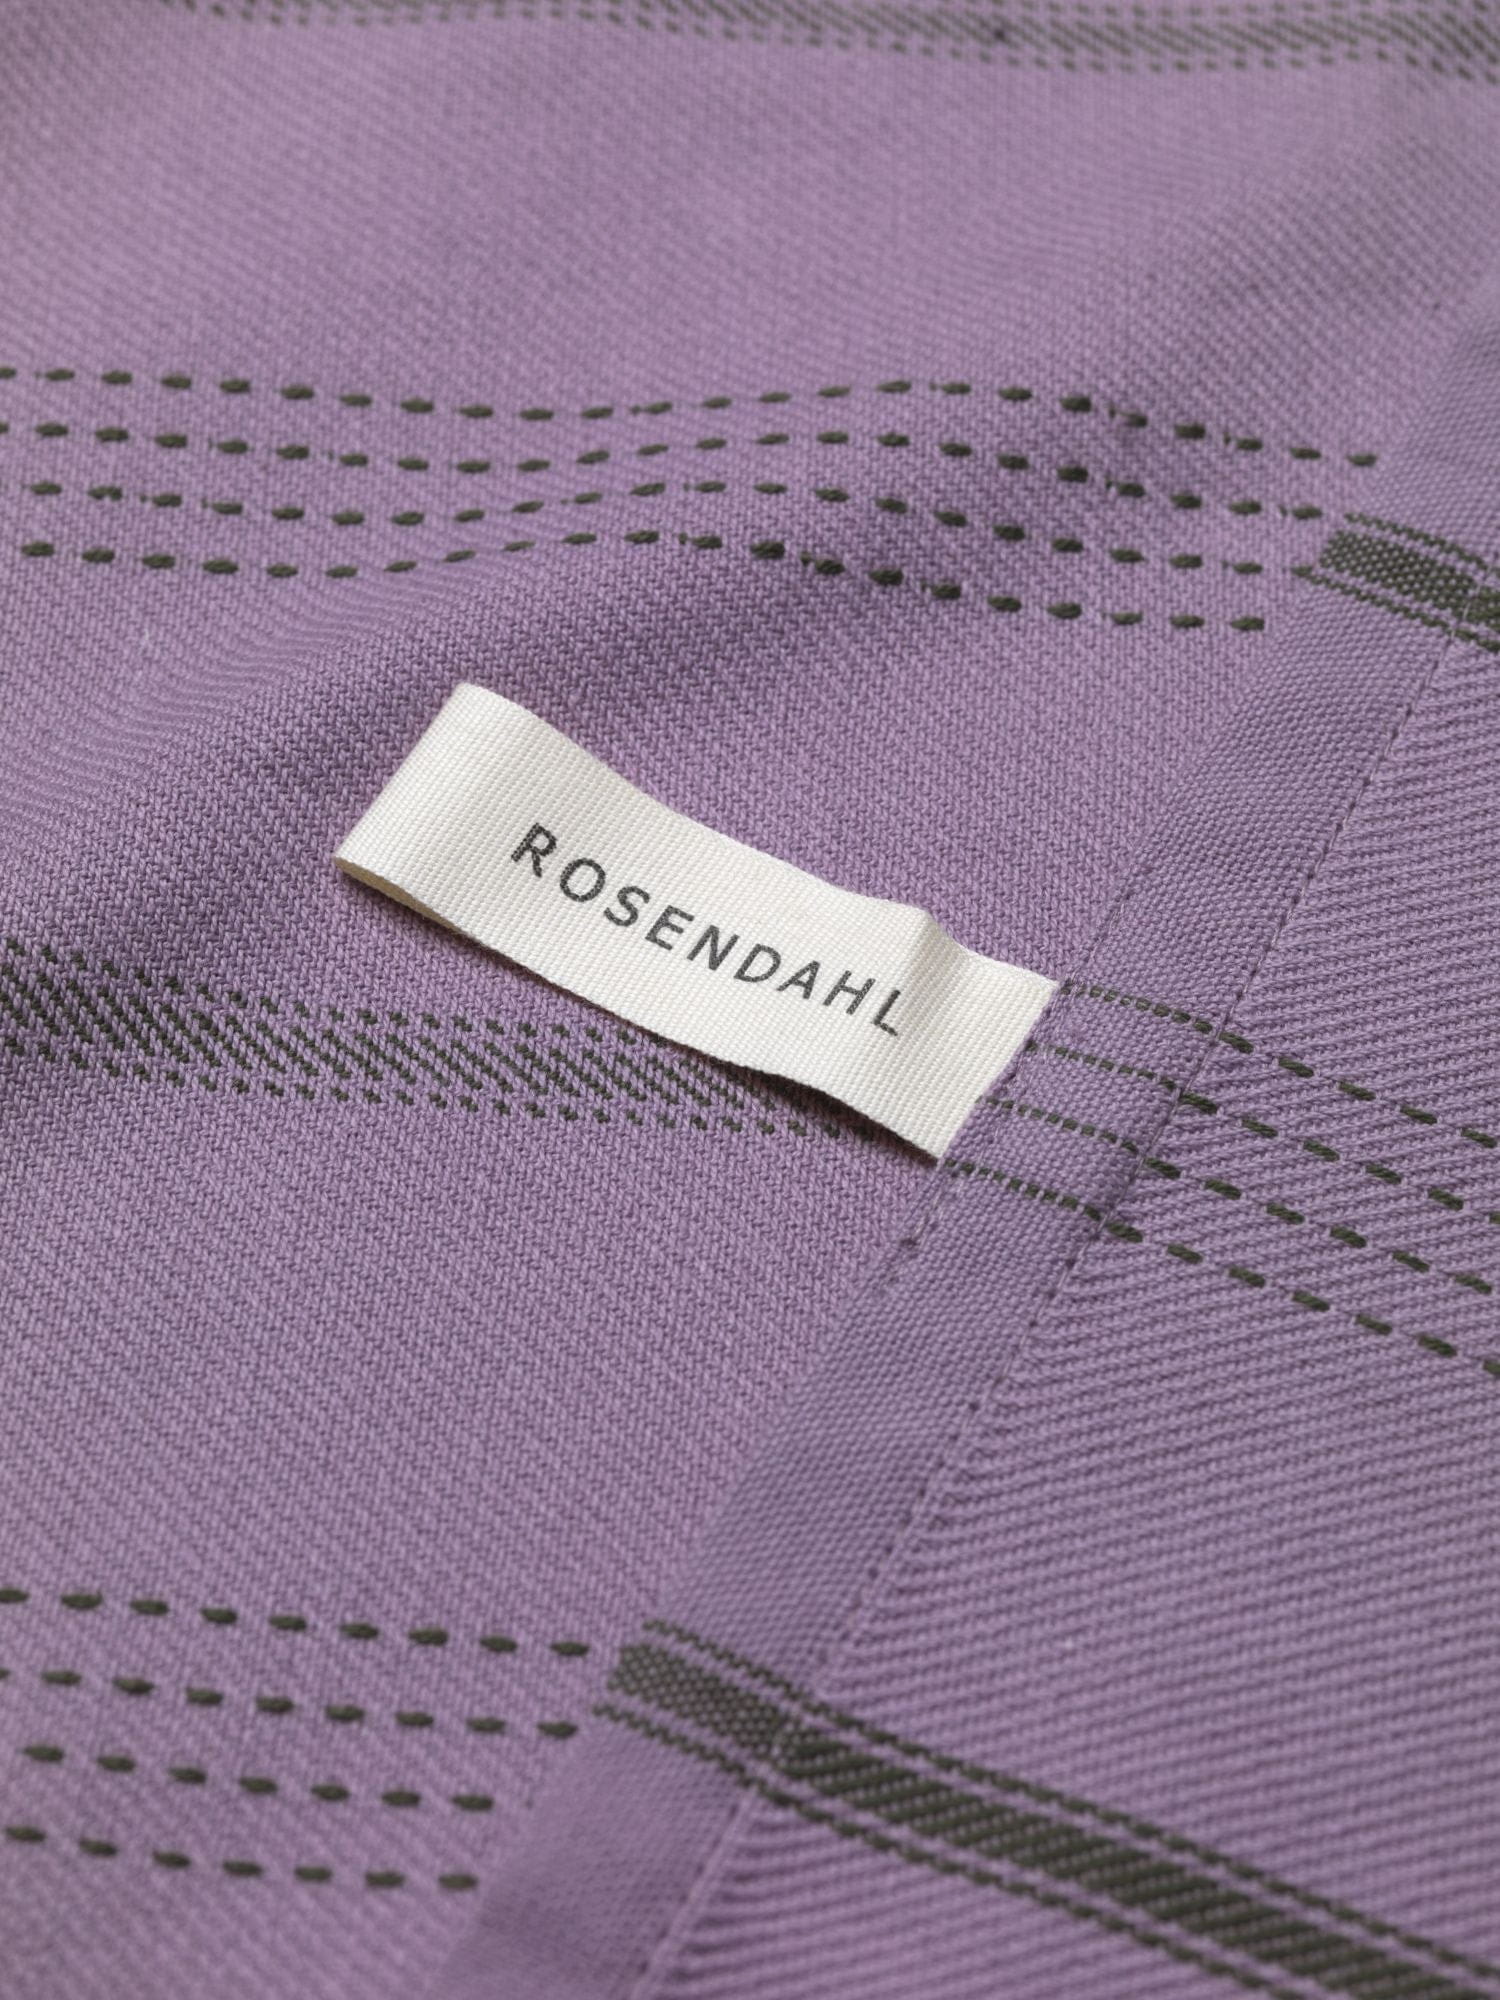 Rosendahl Rosendahl Textiel bèta theedoek 50x70 cm, paars